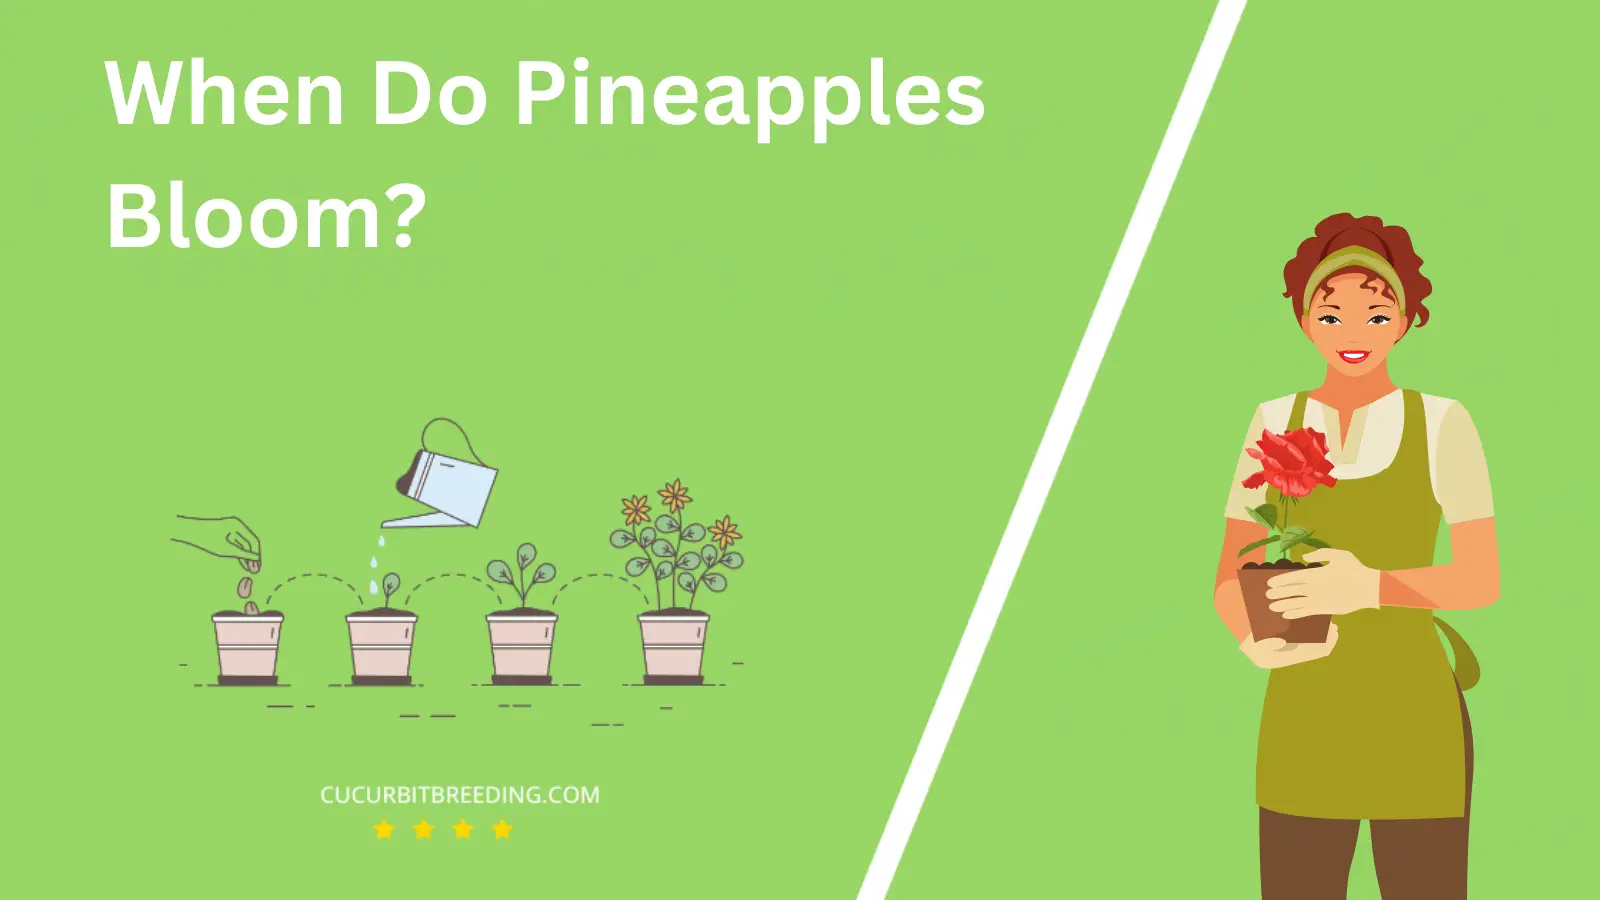 When Do Pineapples Bloom?